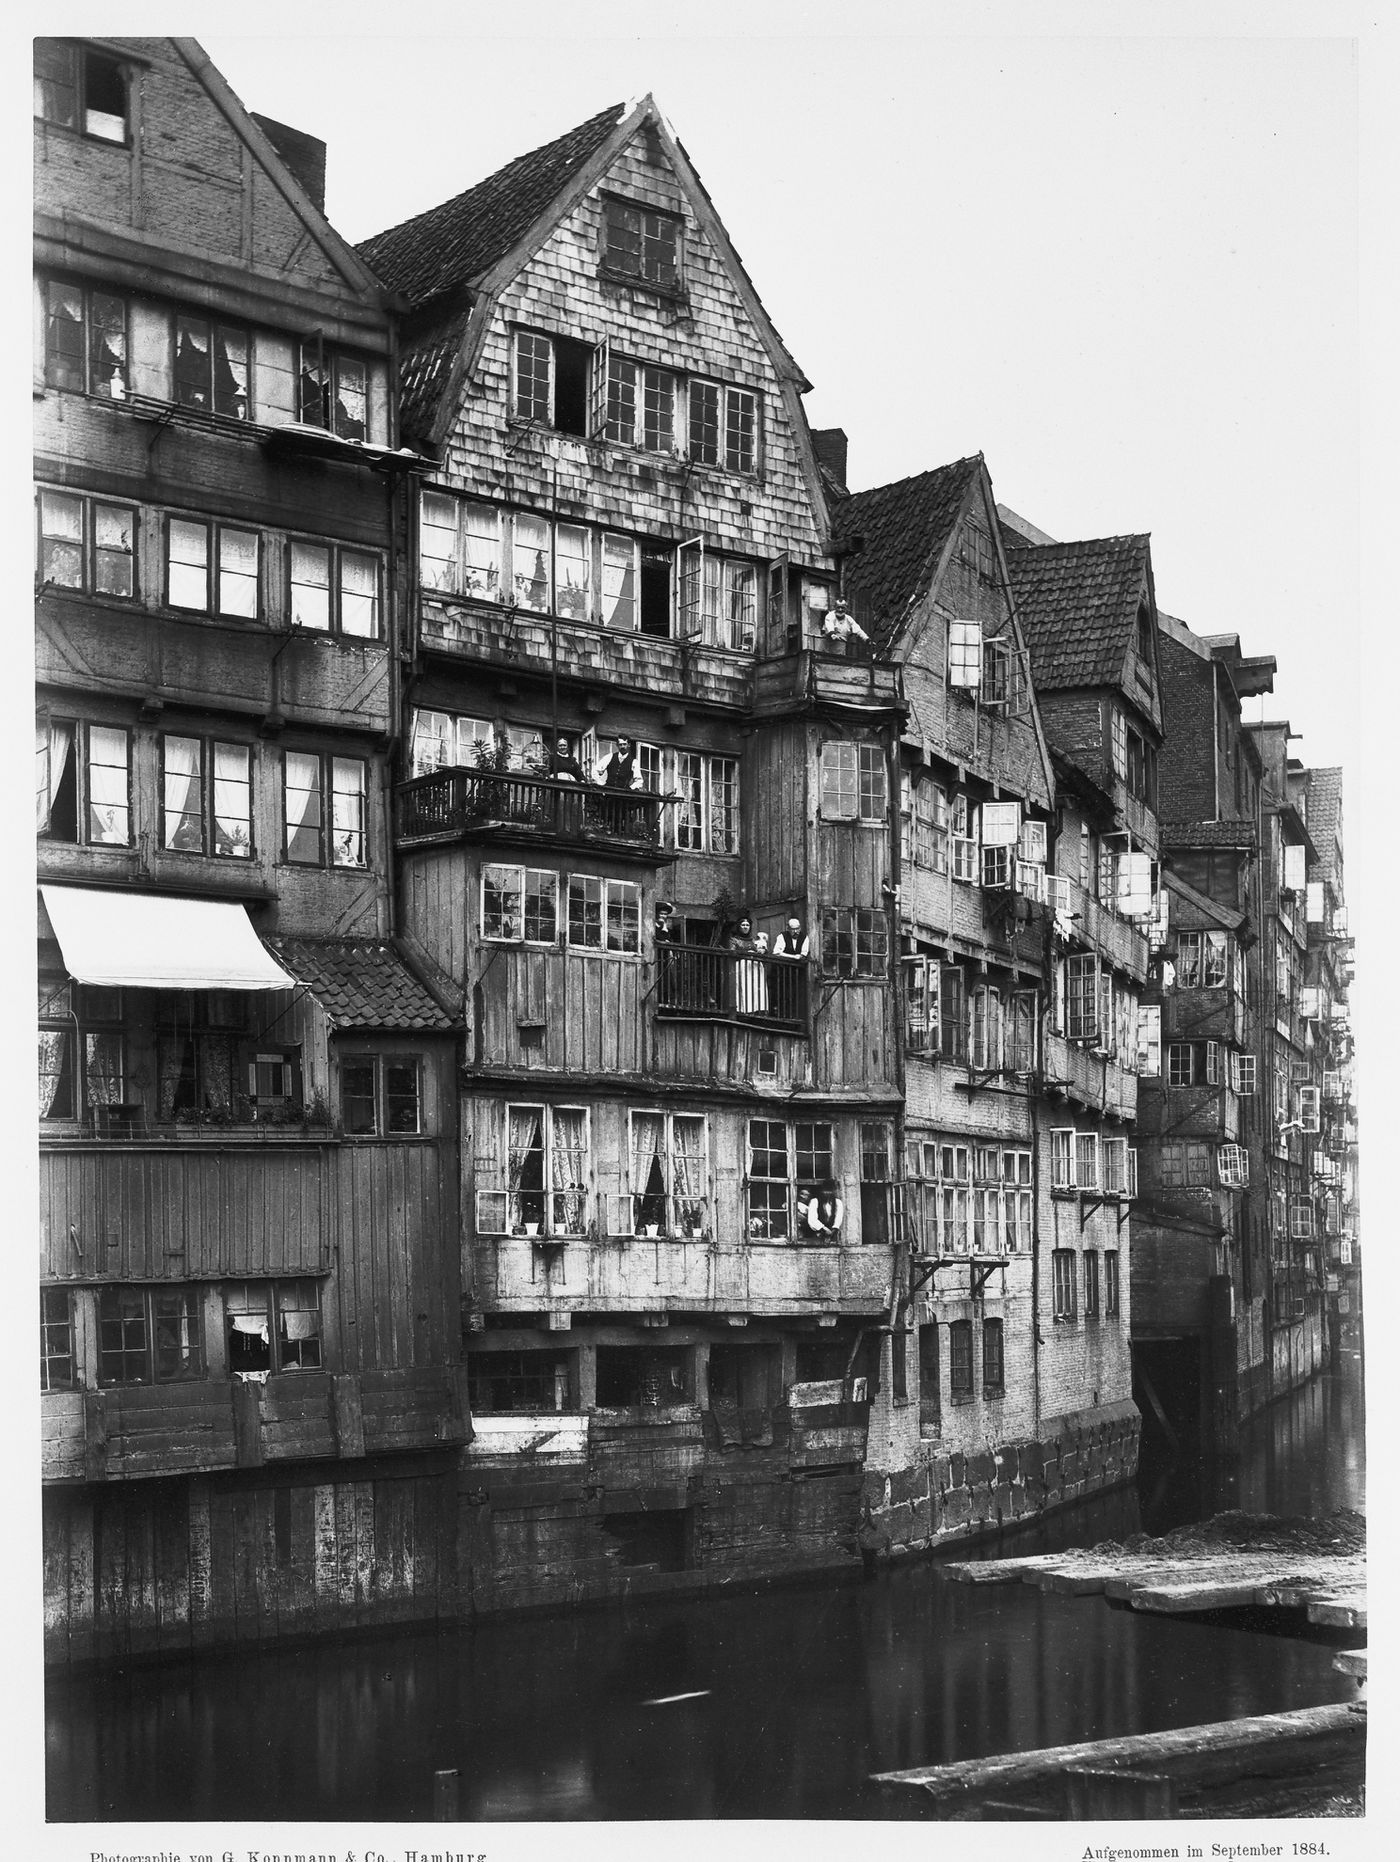 Houses on Muhrenfleth street facing canal, Hamburg, Germany